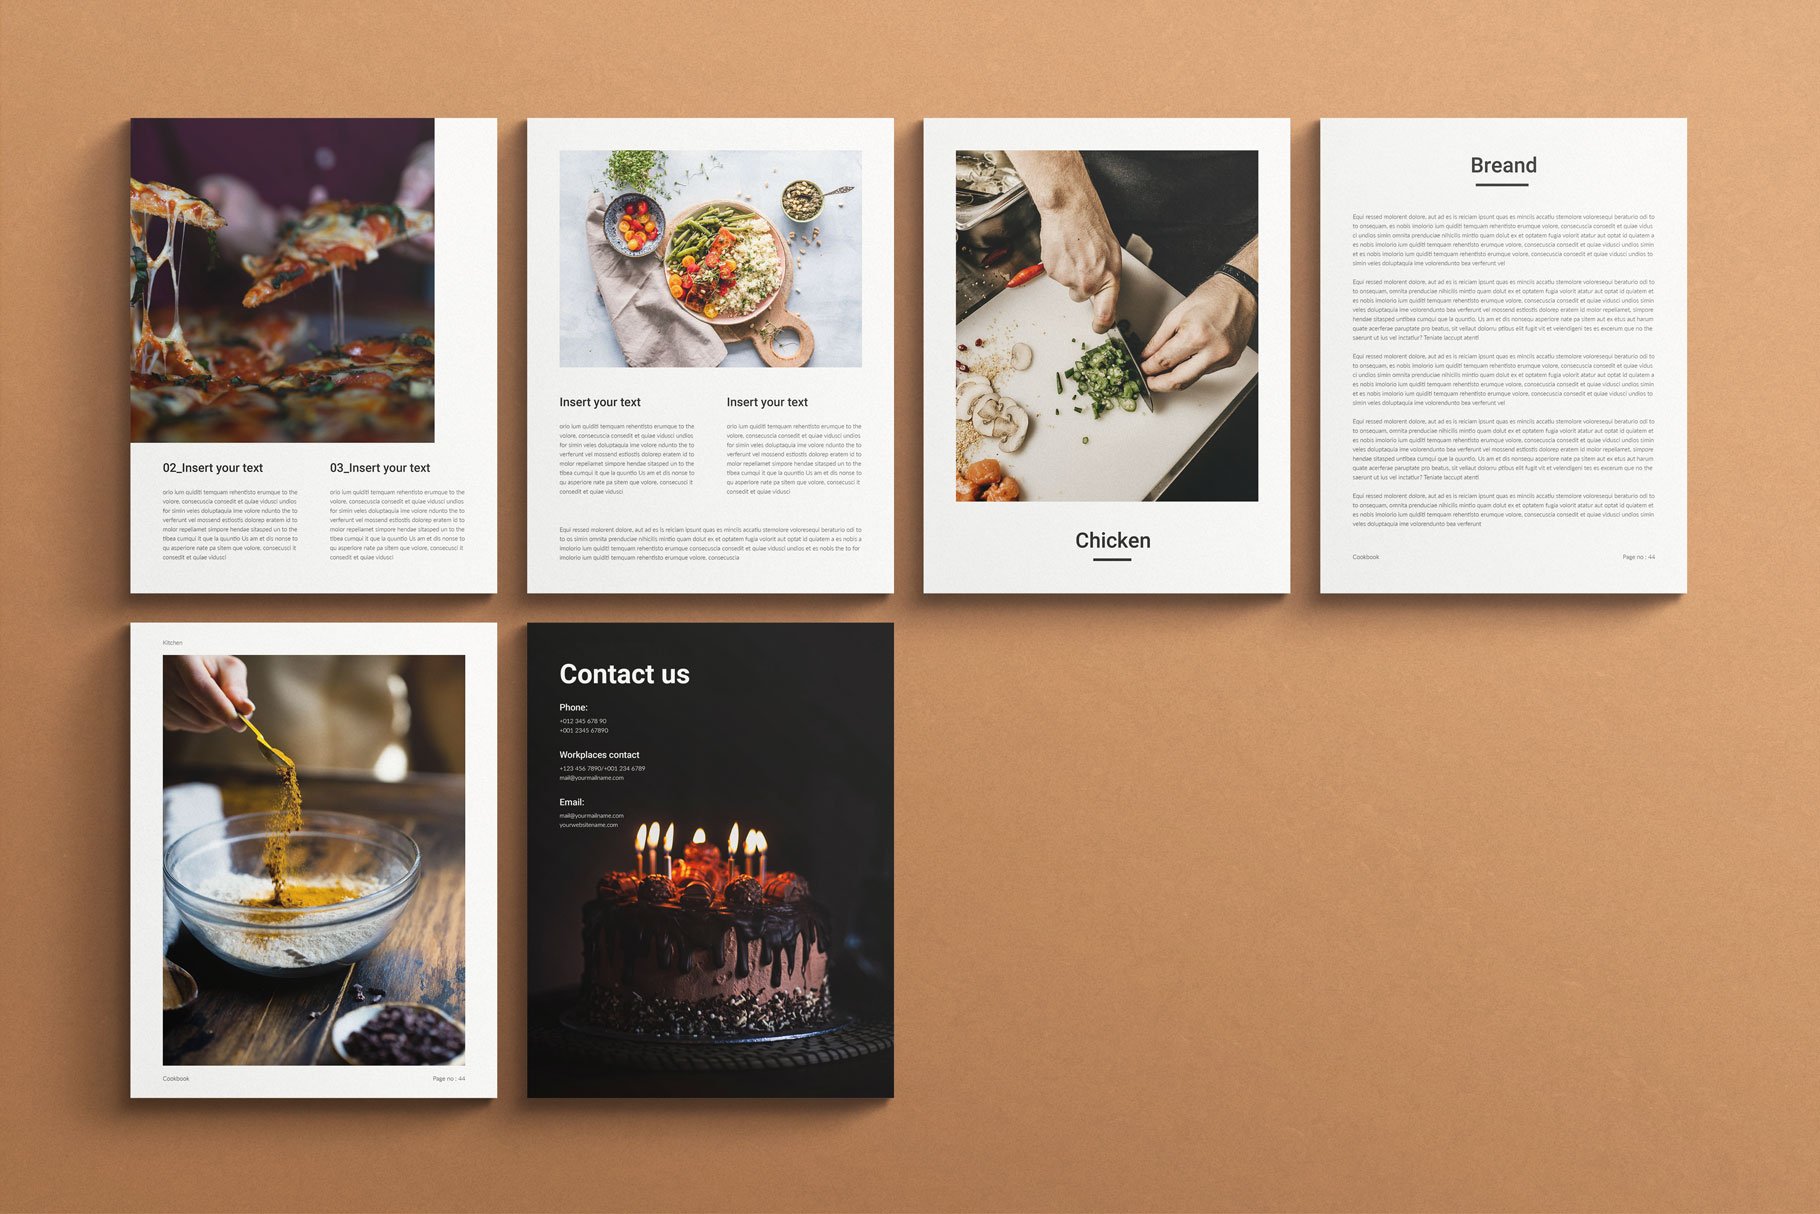 https://designcuts.b-cdn.net/wp-content/uploads/2023/03/jA4Hqqr9-kitchen-cookbook-recipe-book-template-1.jpg